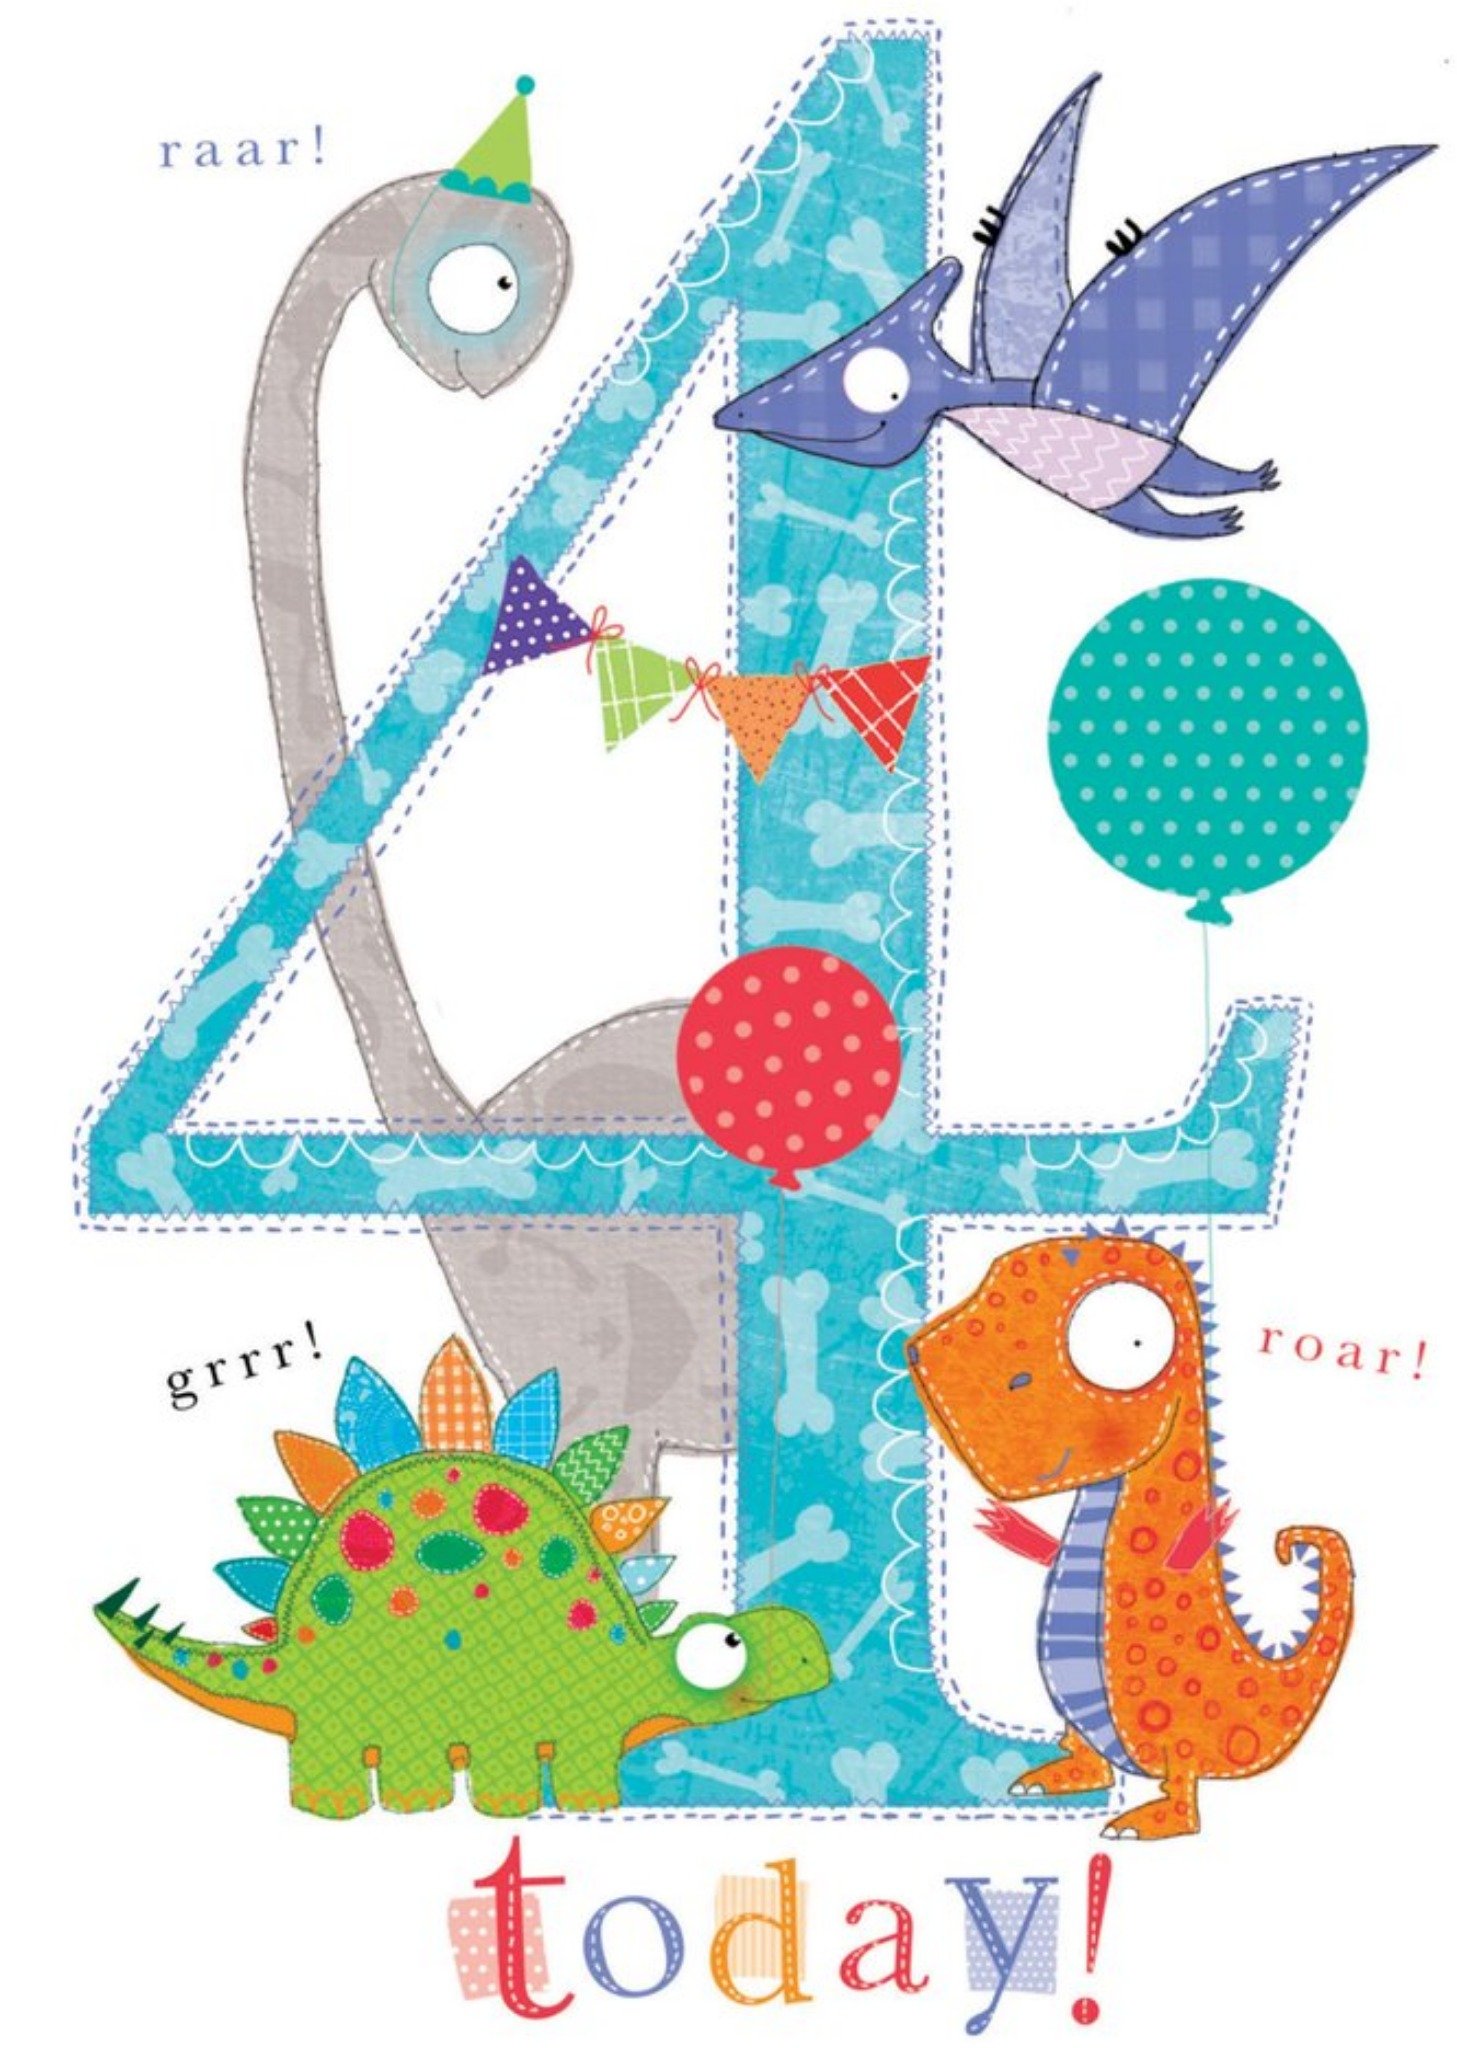 Moonpig 4 Today Cute Dinosaurs Birthday Card, Large